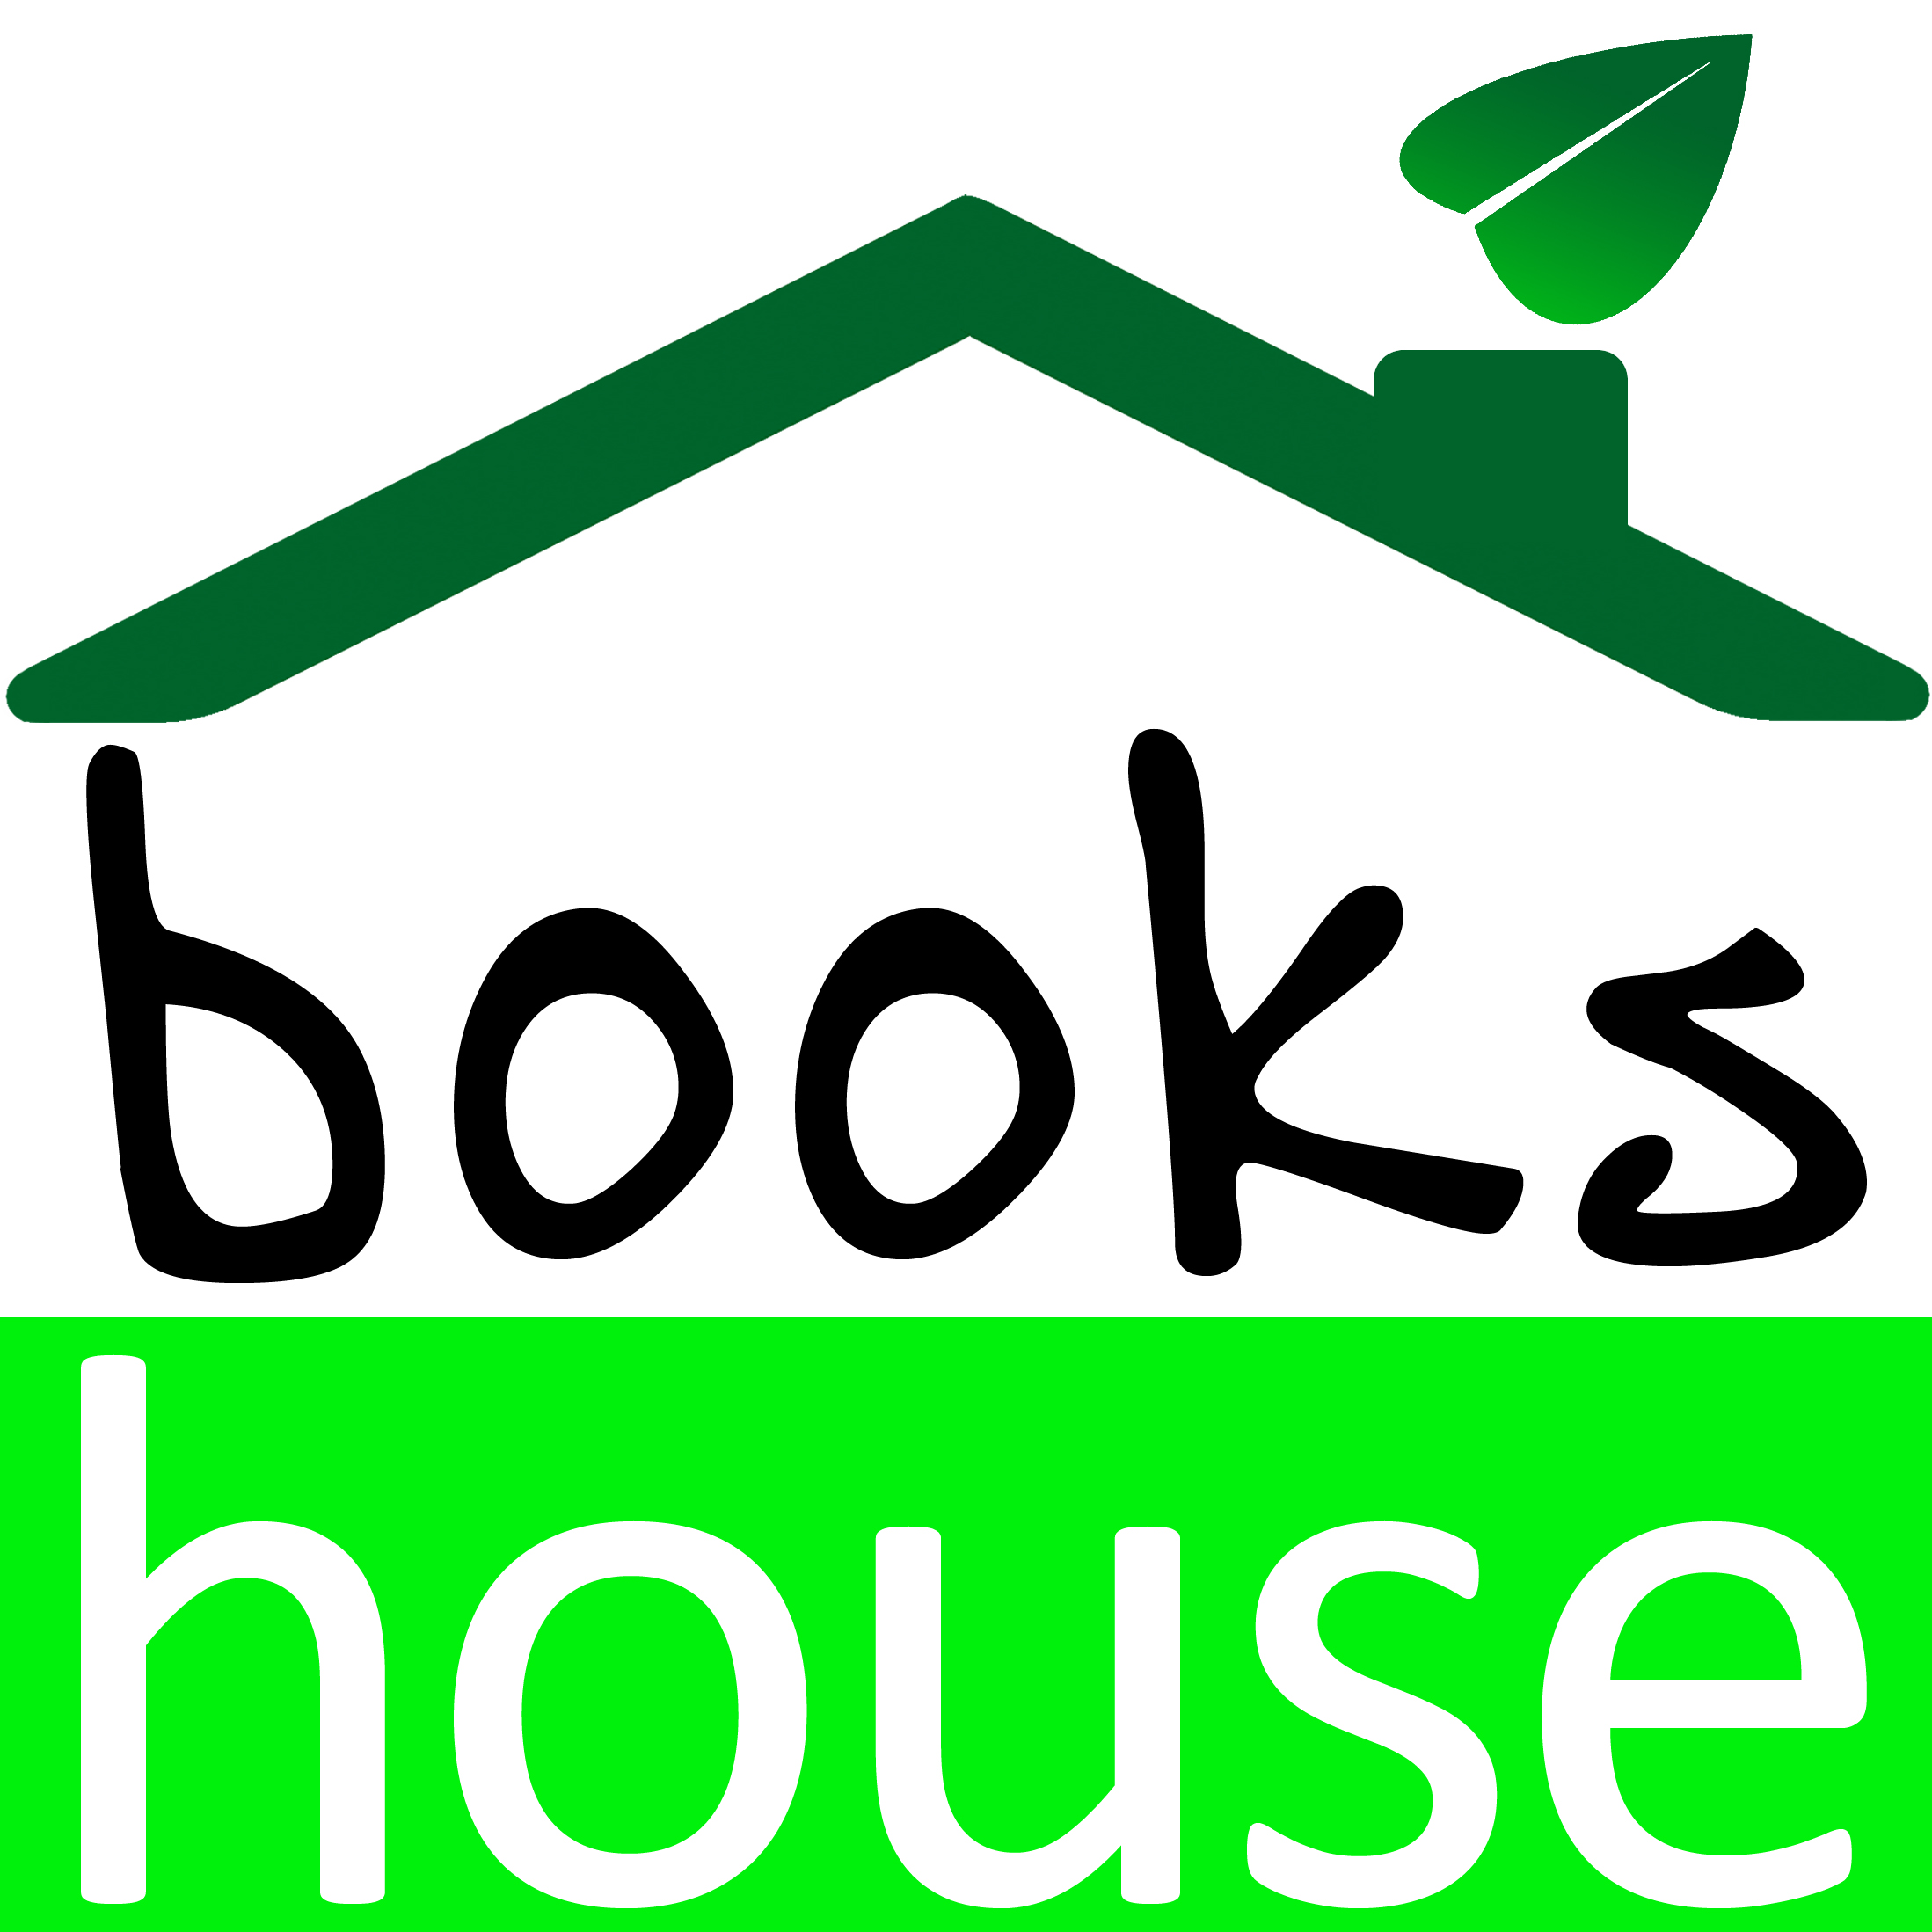 bookshouselowxo59k3bap